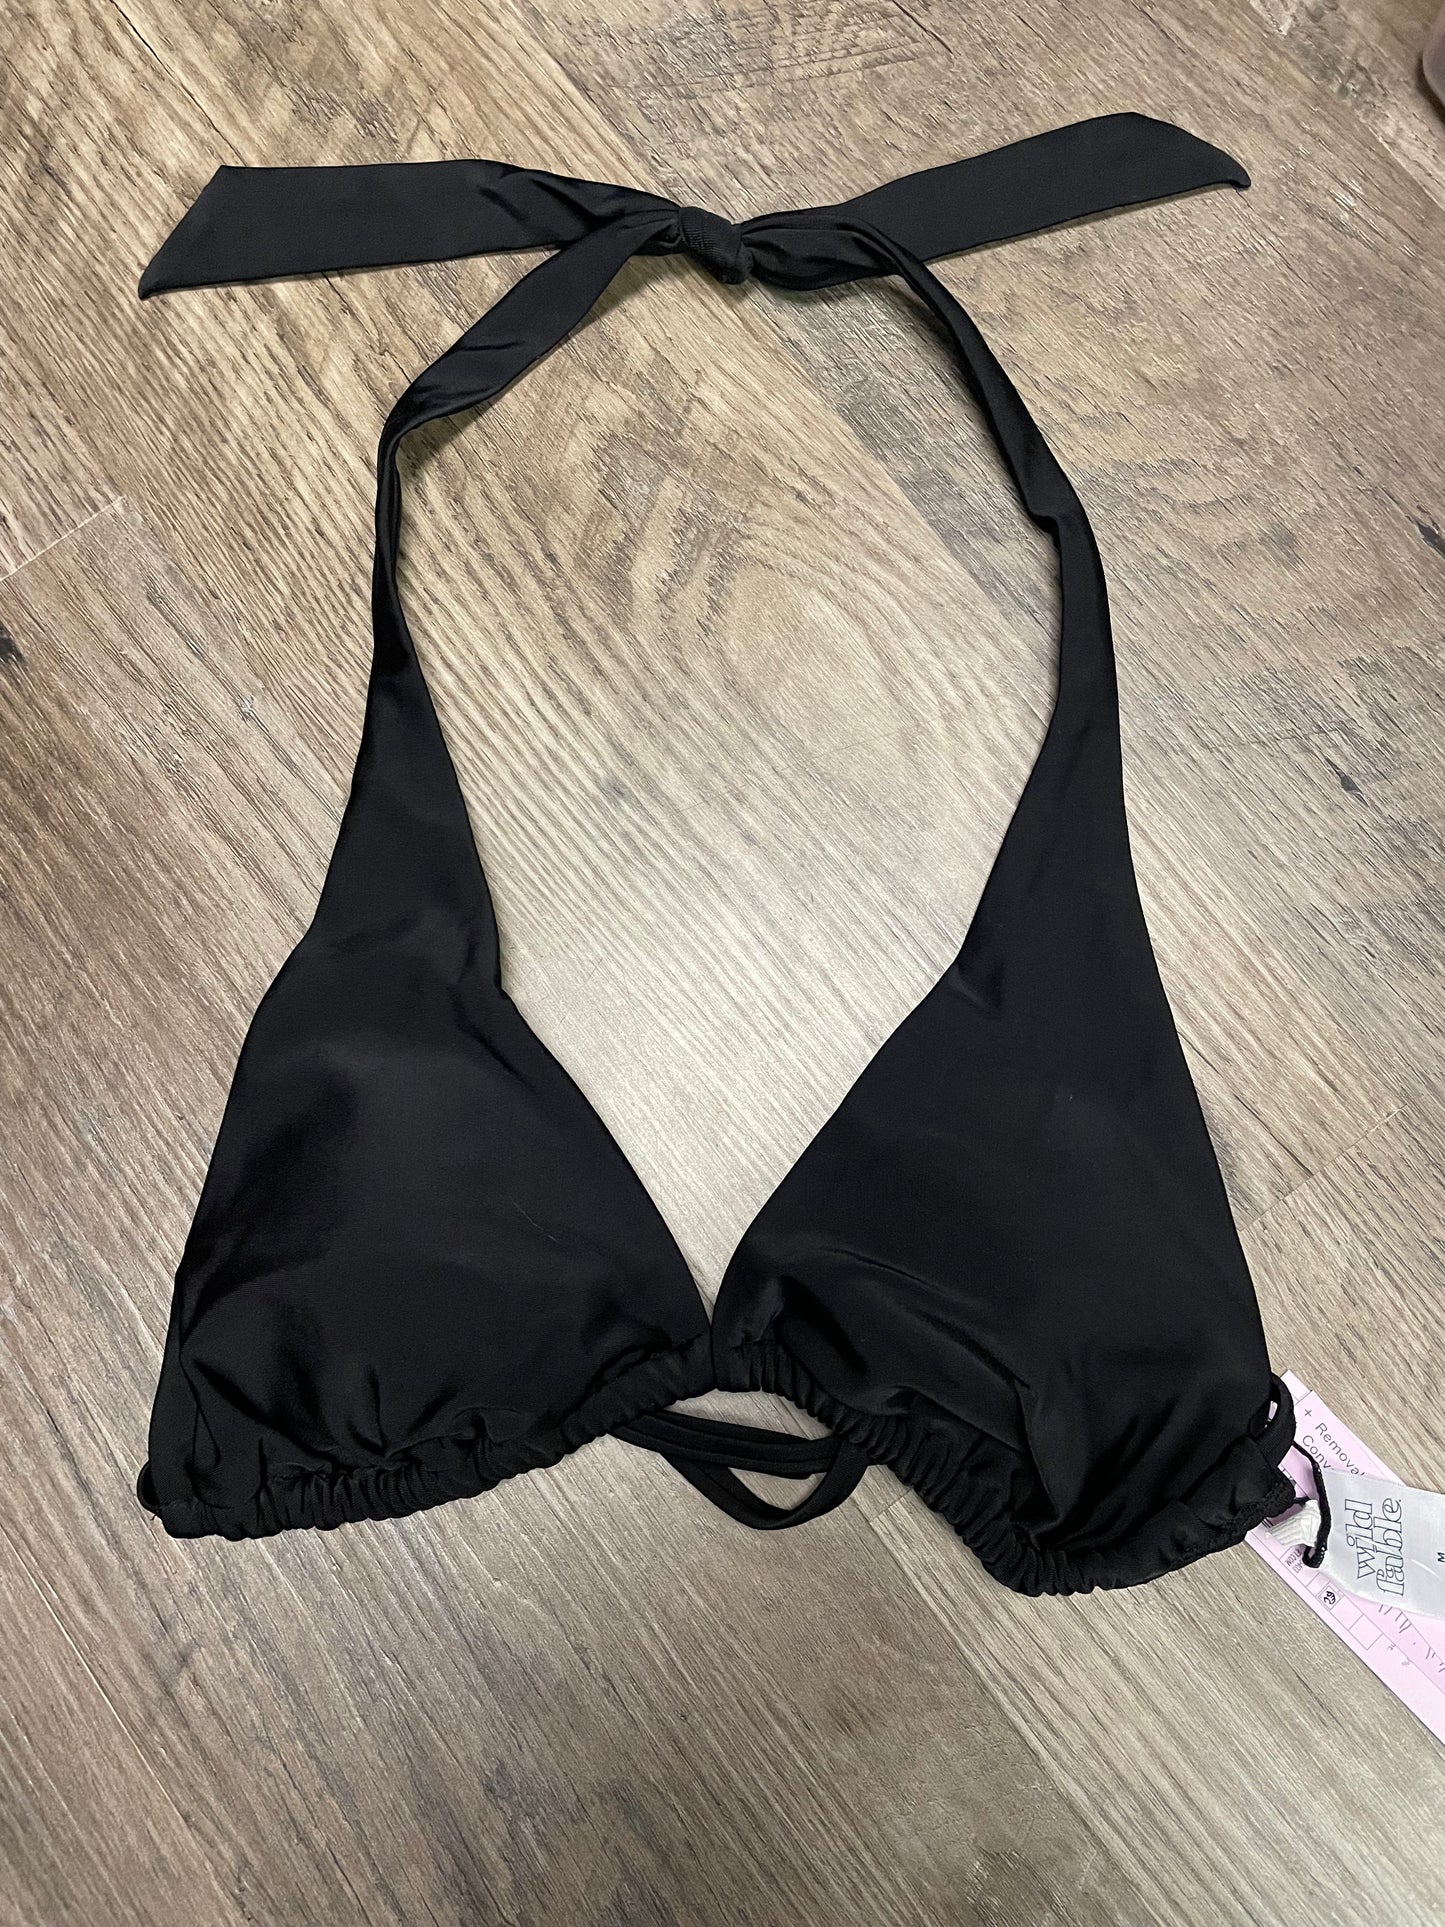 New Women L 10-12  bikini top. Wild fable. Black